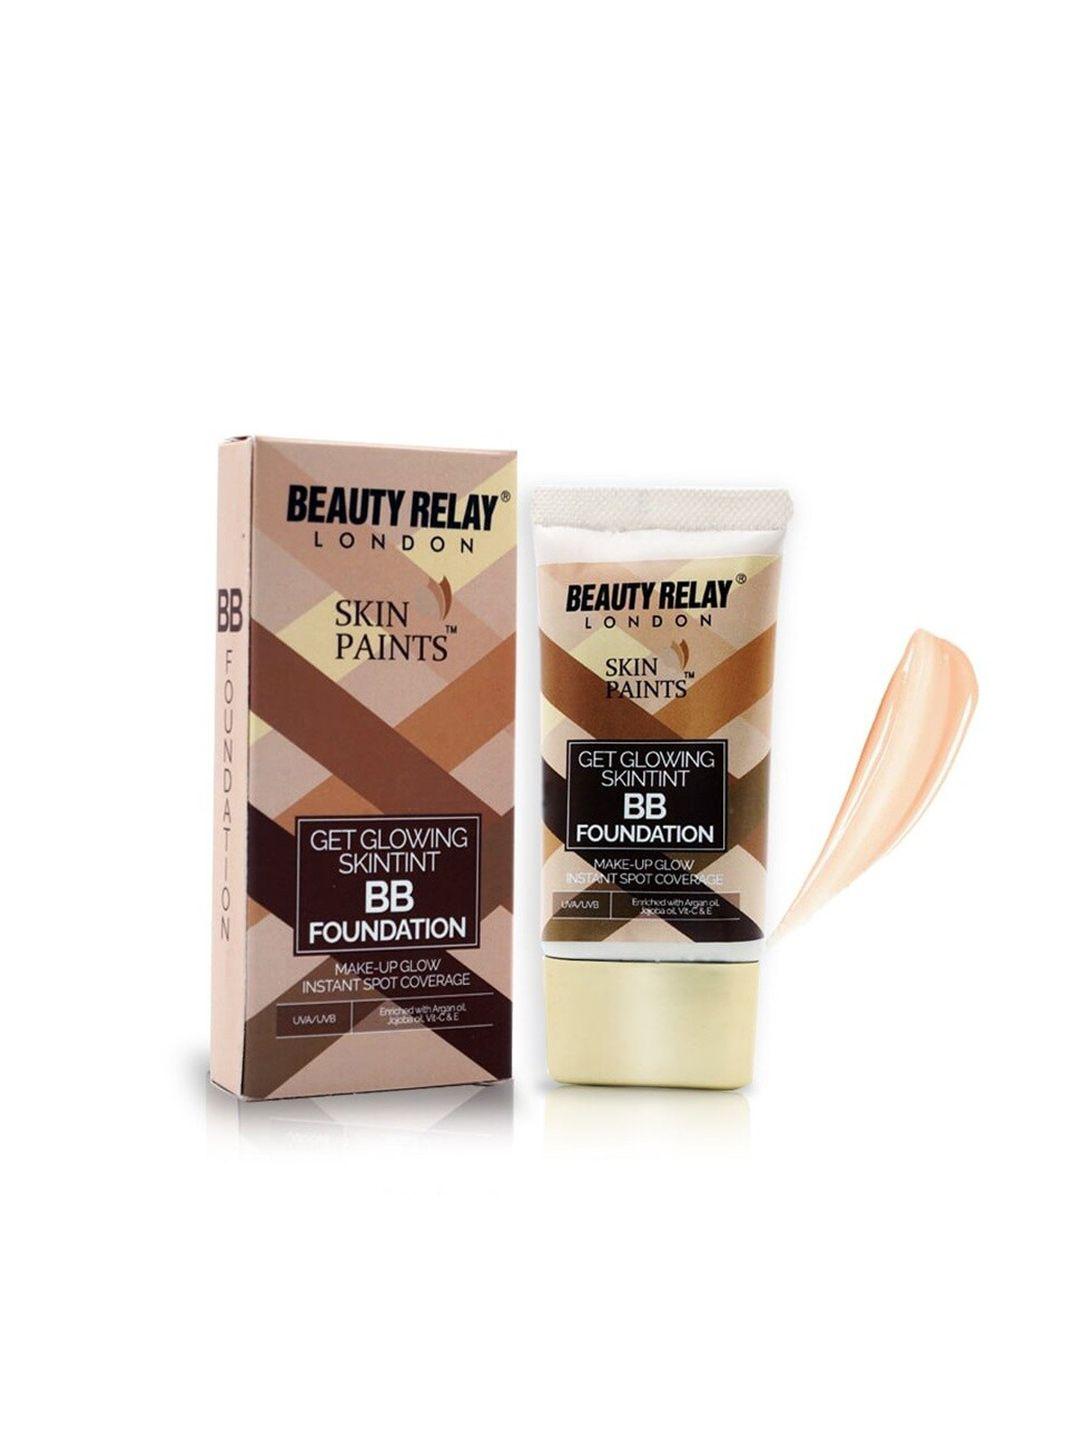 beautyrelay london skin paints get glowing skintint bb foundation 30g - soft tan 228